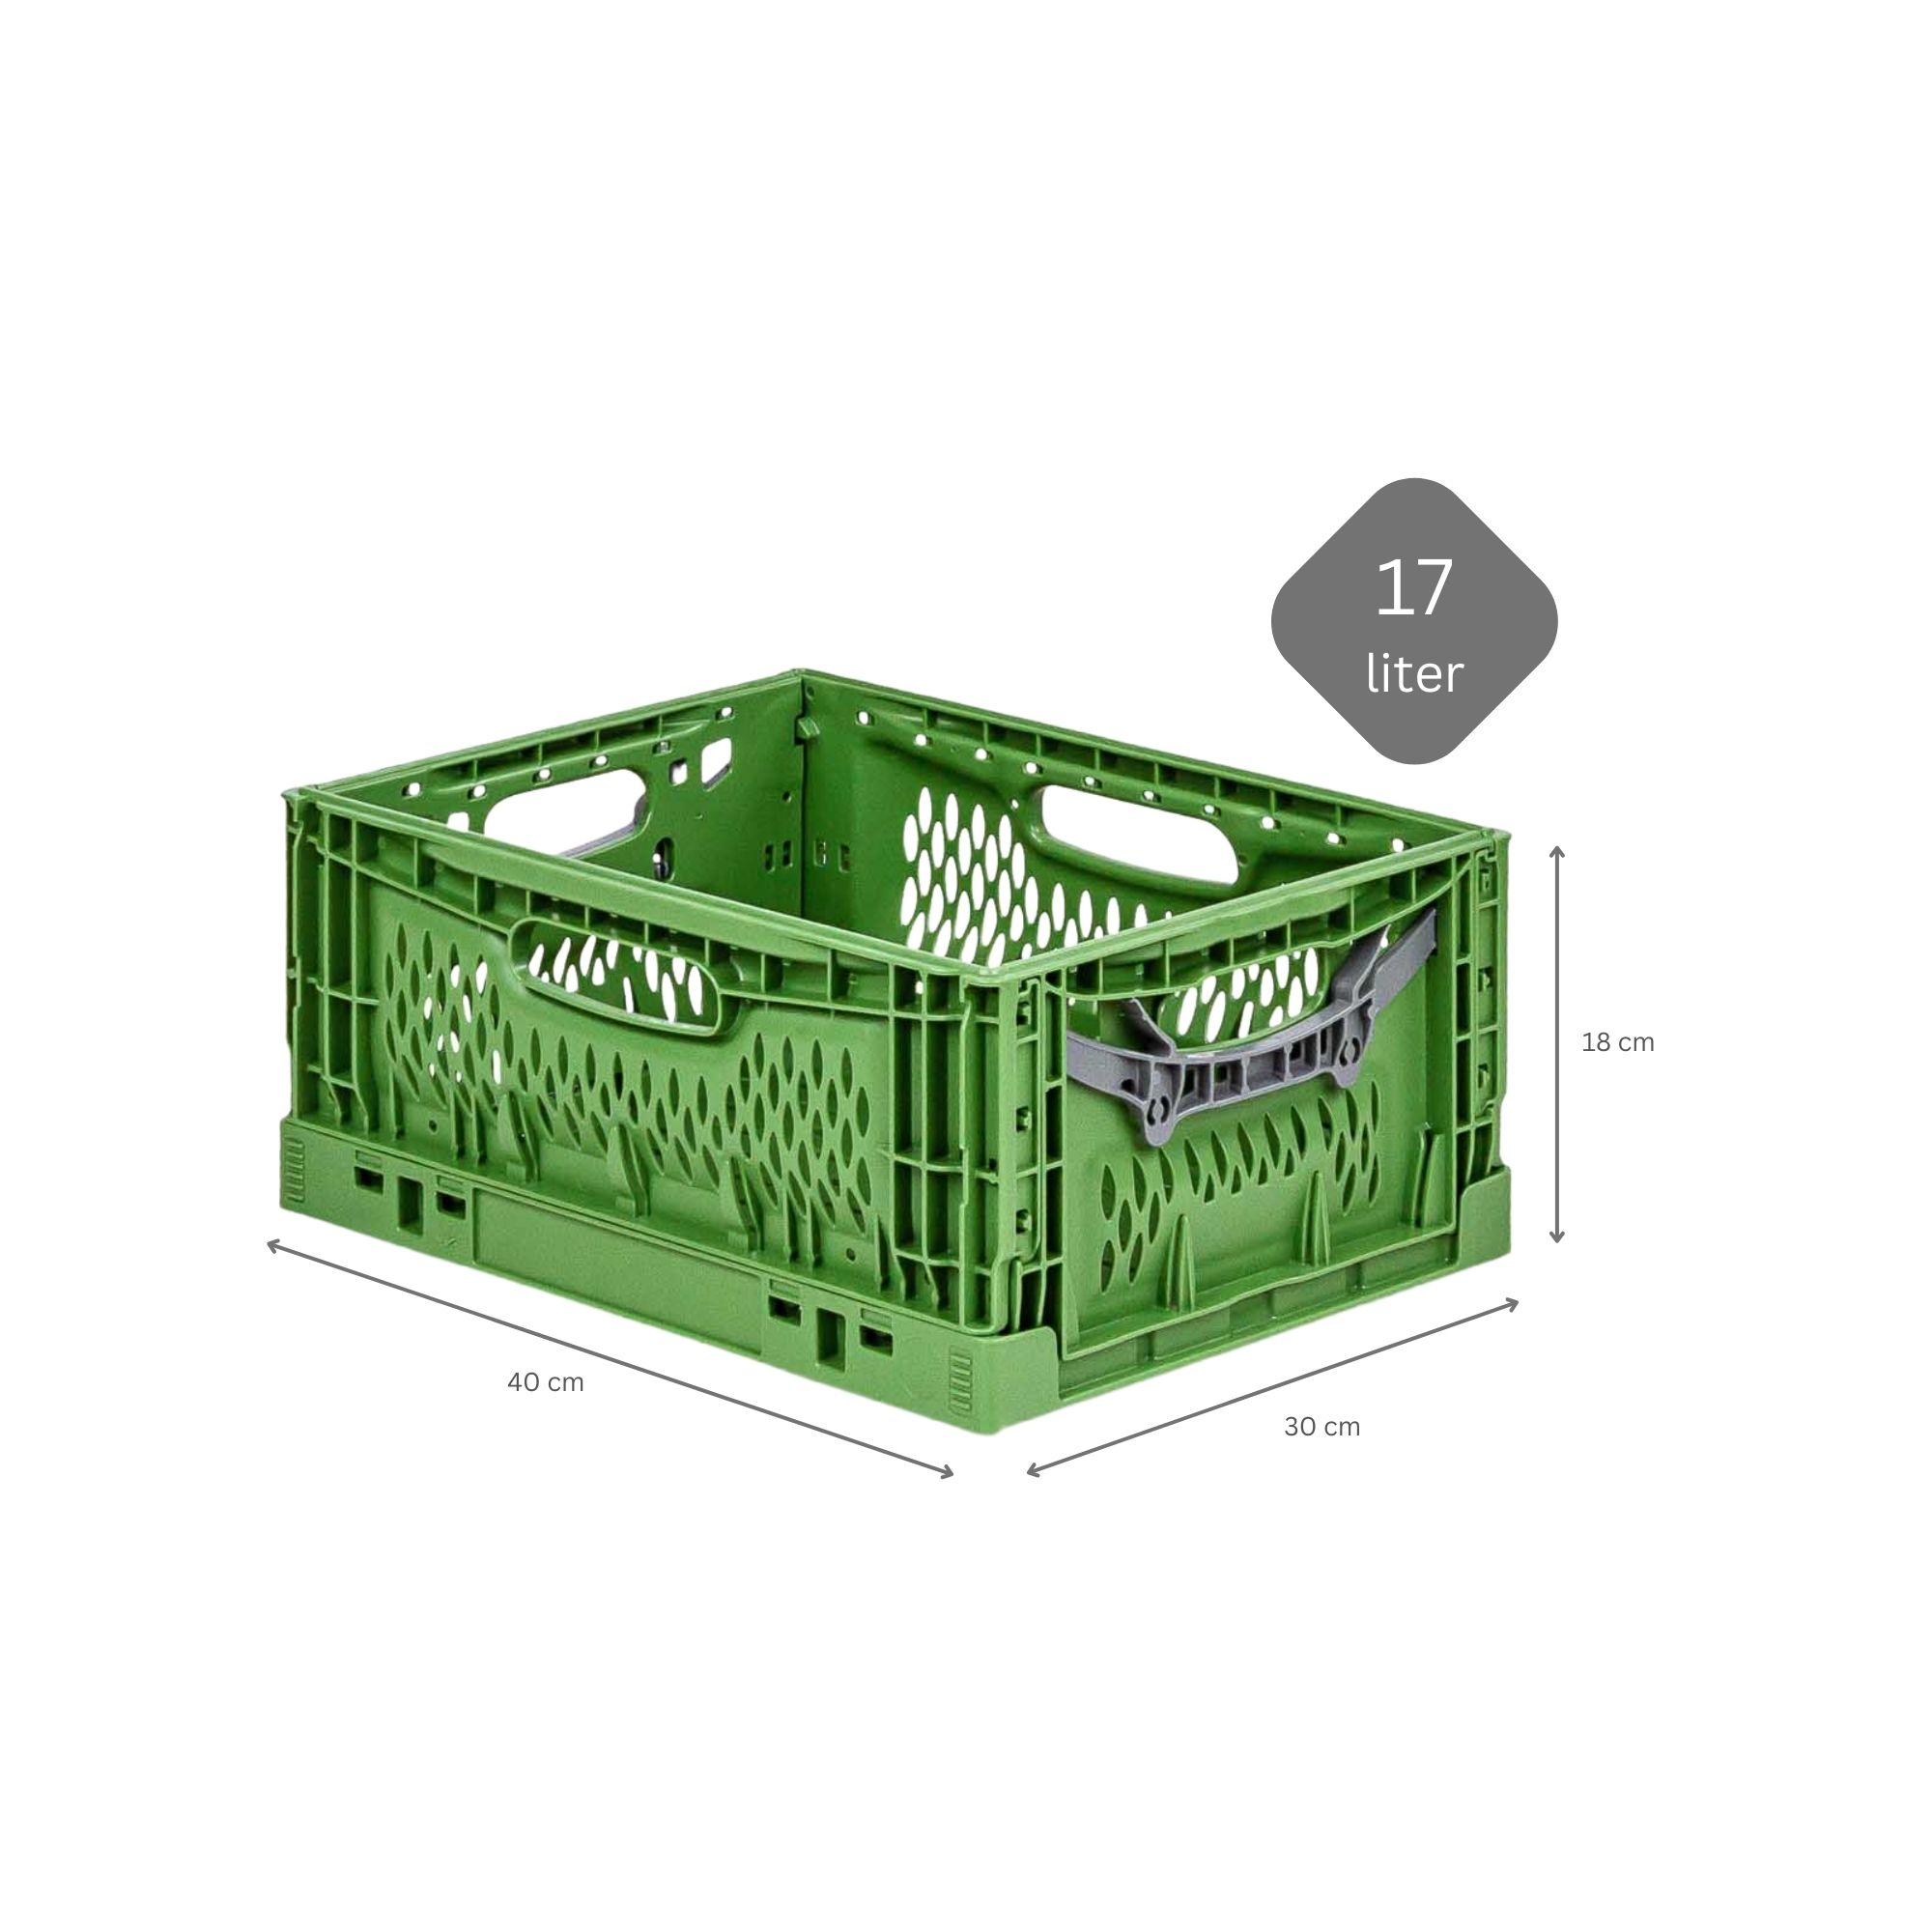 Stabile Profi-Klappbox Chameleon in Industriequalität | HxBxT 18x30x40cm | 17 Liter | klappbar stapelbar durchbrochen lebensmittelecht | Eurobox Eurobehälter Transportbehälter Stapelbehlter Faltbox